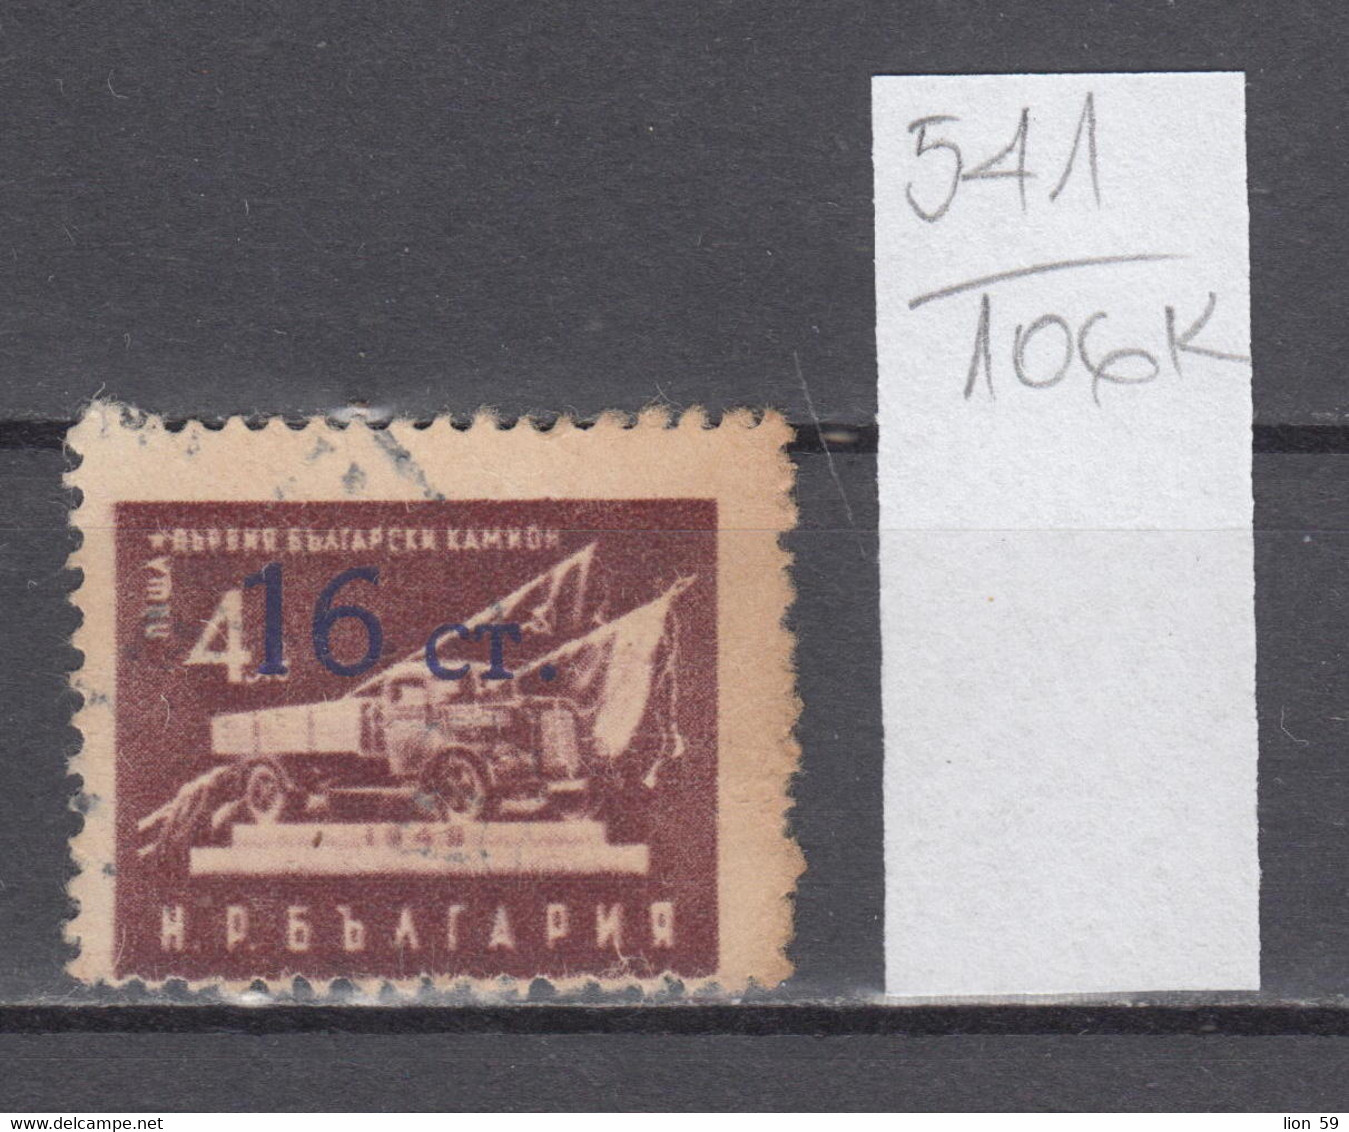 106K541 / ERROR Negative Bulgaria 1955 Michel Nr. 943 I+II Used ( O ) 16 St. / 4 Leva Truck Definitive Issue Overprinted - Errors, Freaks & Oddities (EFO)